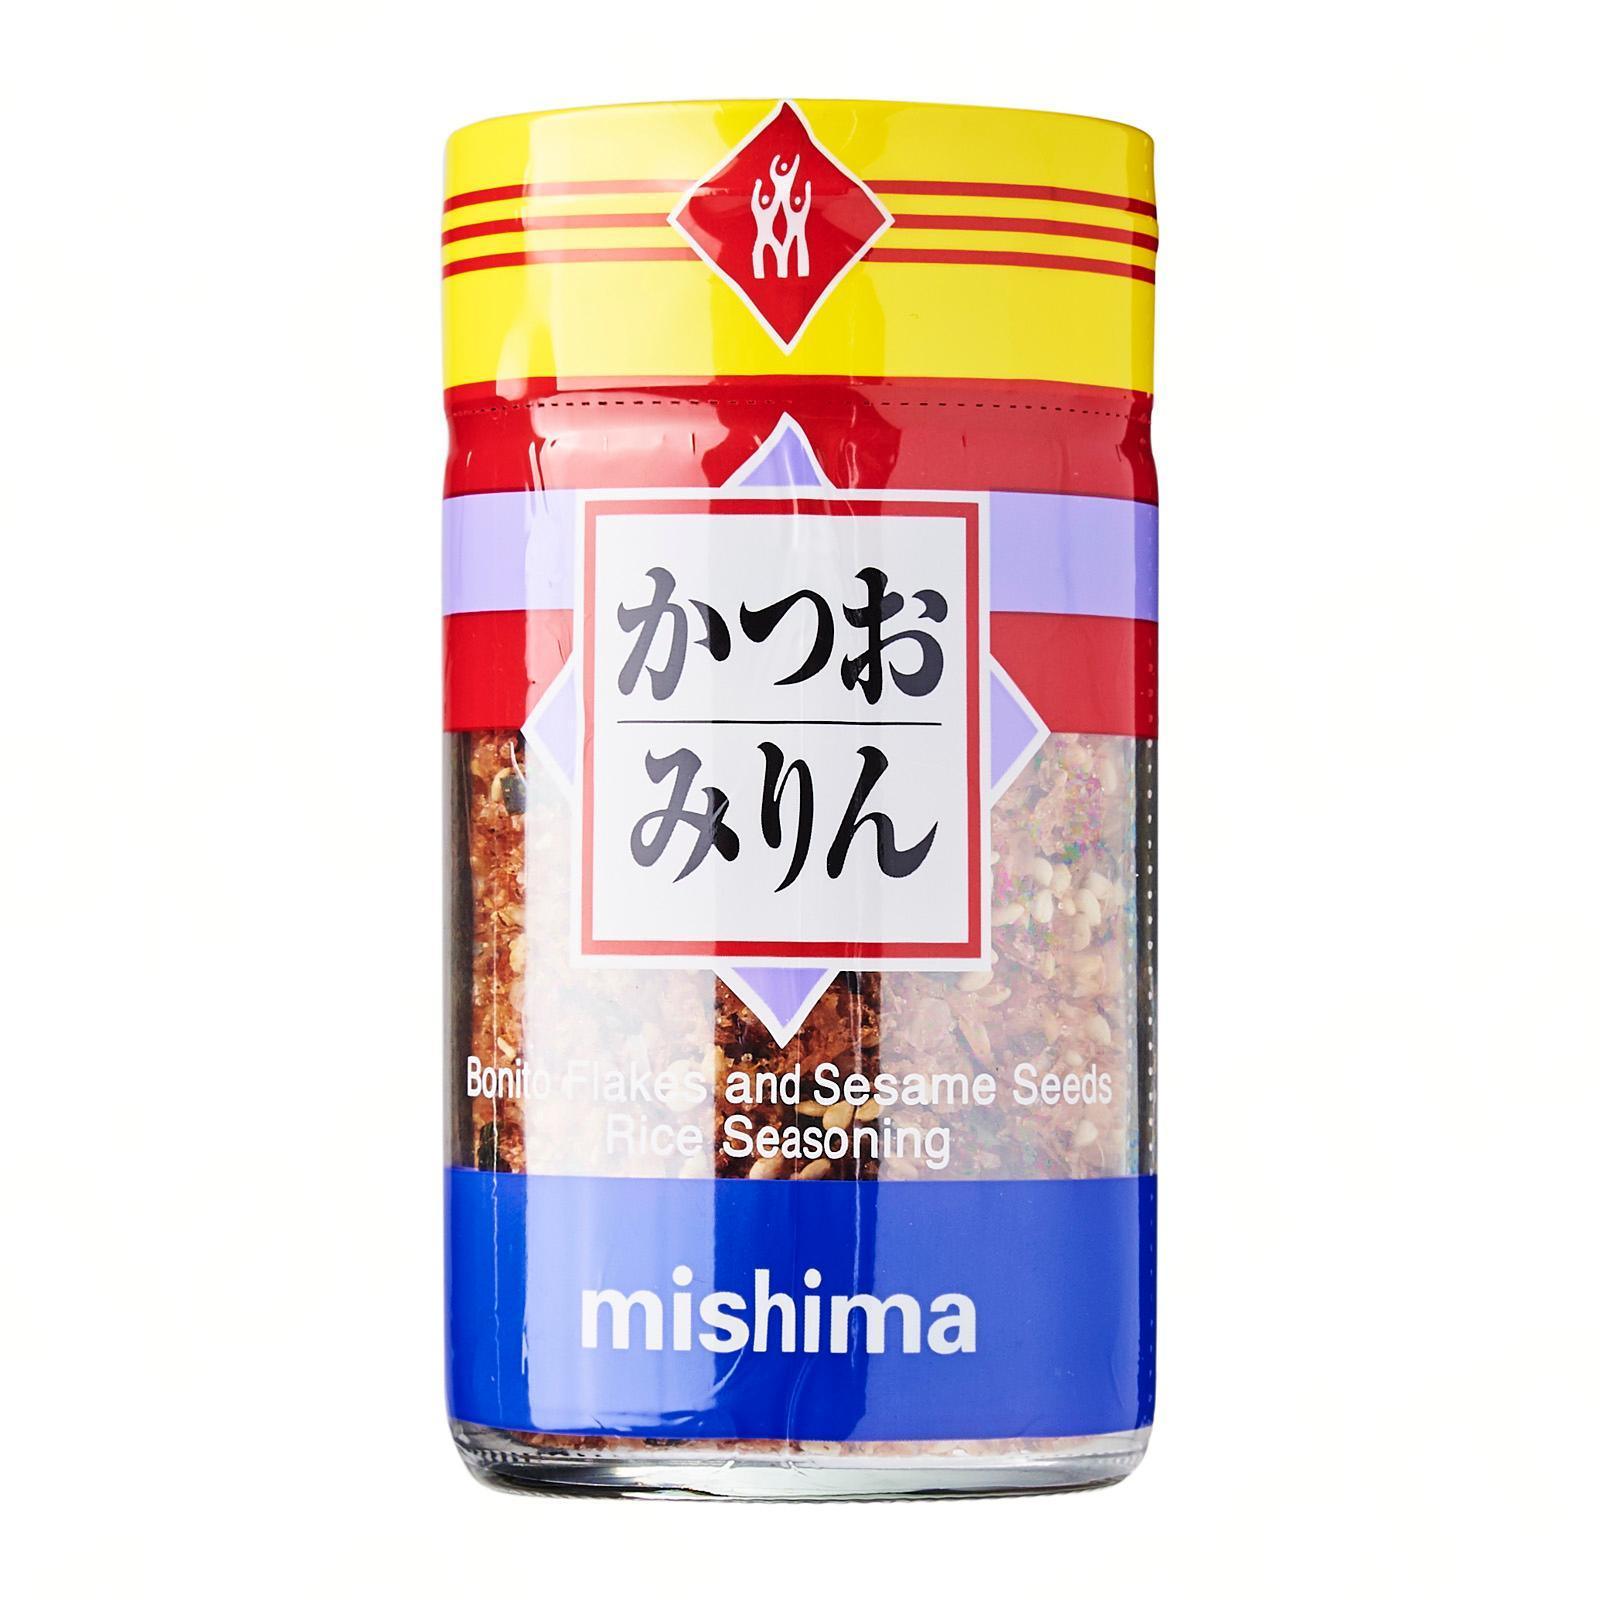 MISHIMA KATSUO MIRIN BONITO FLAKES AND SESAME SEED RICE 45 G - Premium Co  Groceries 